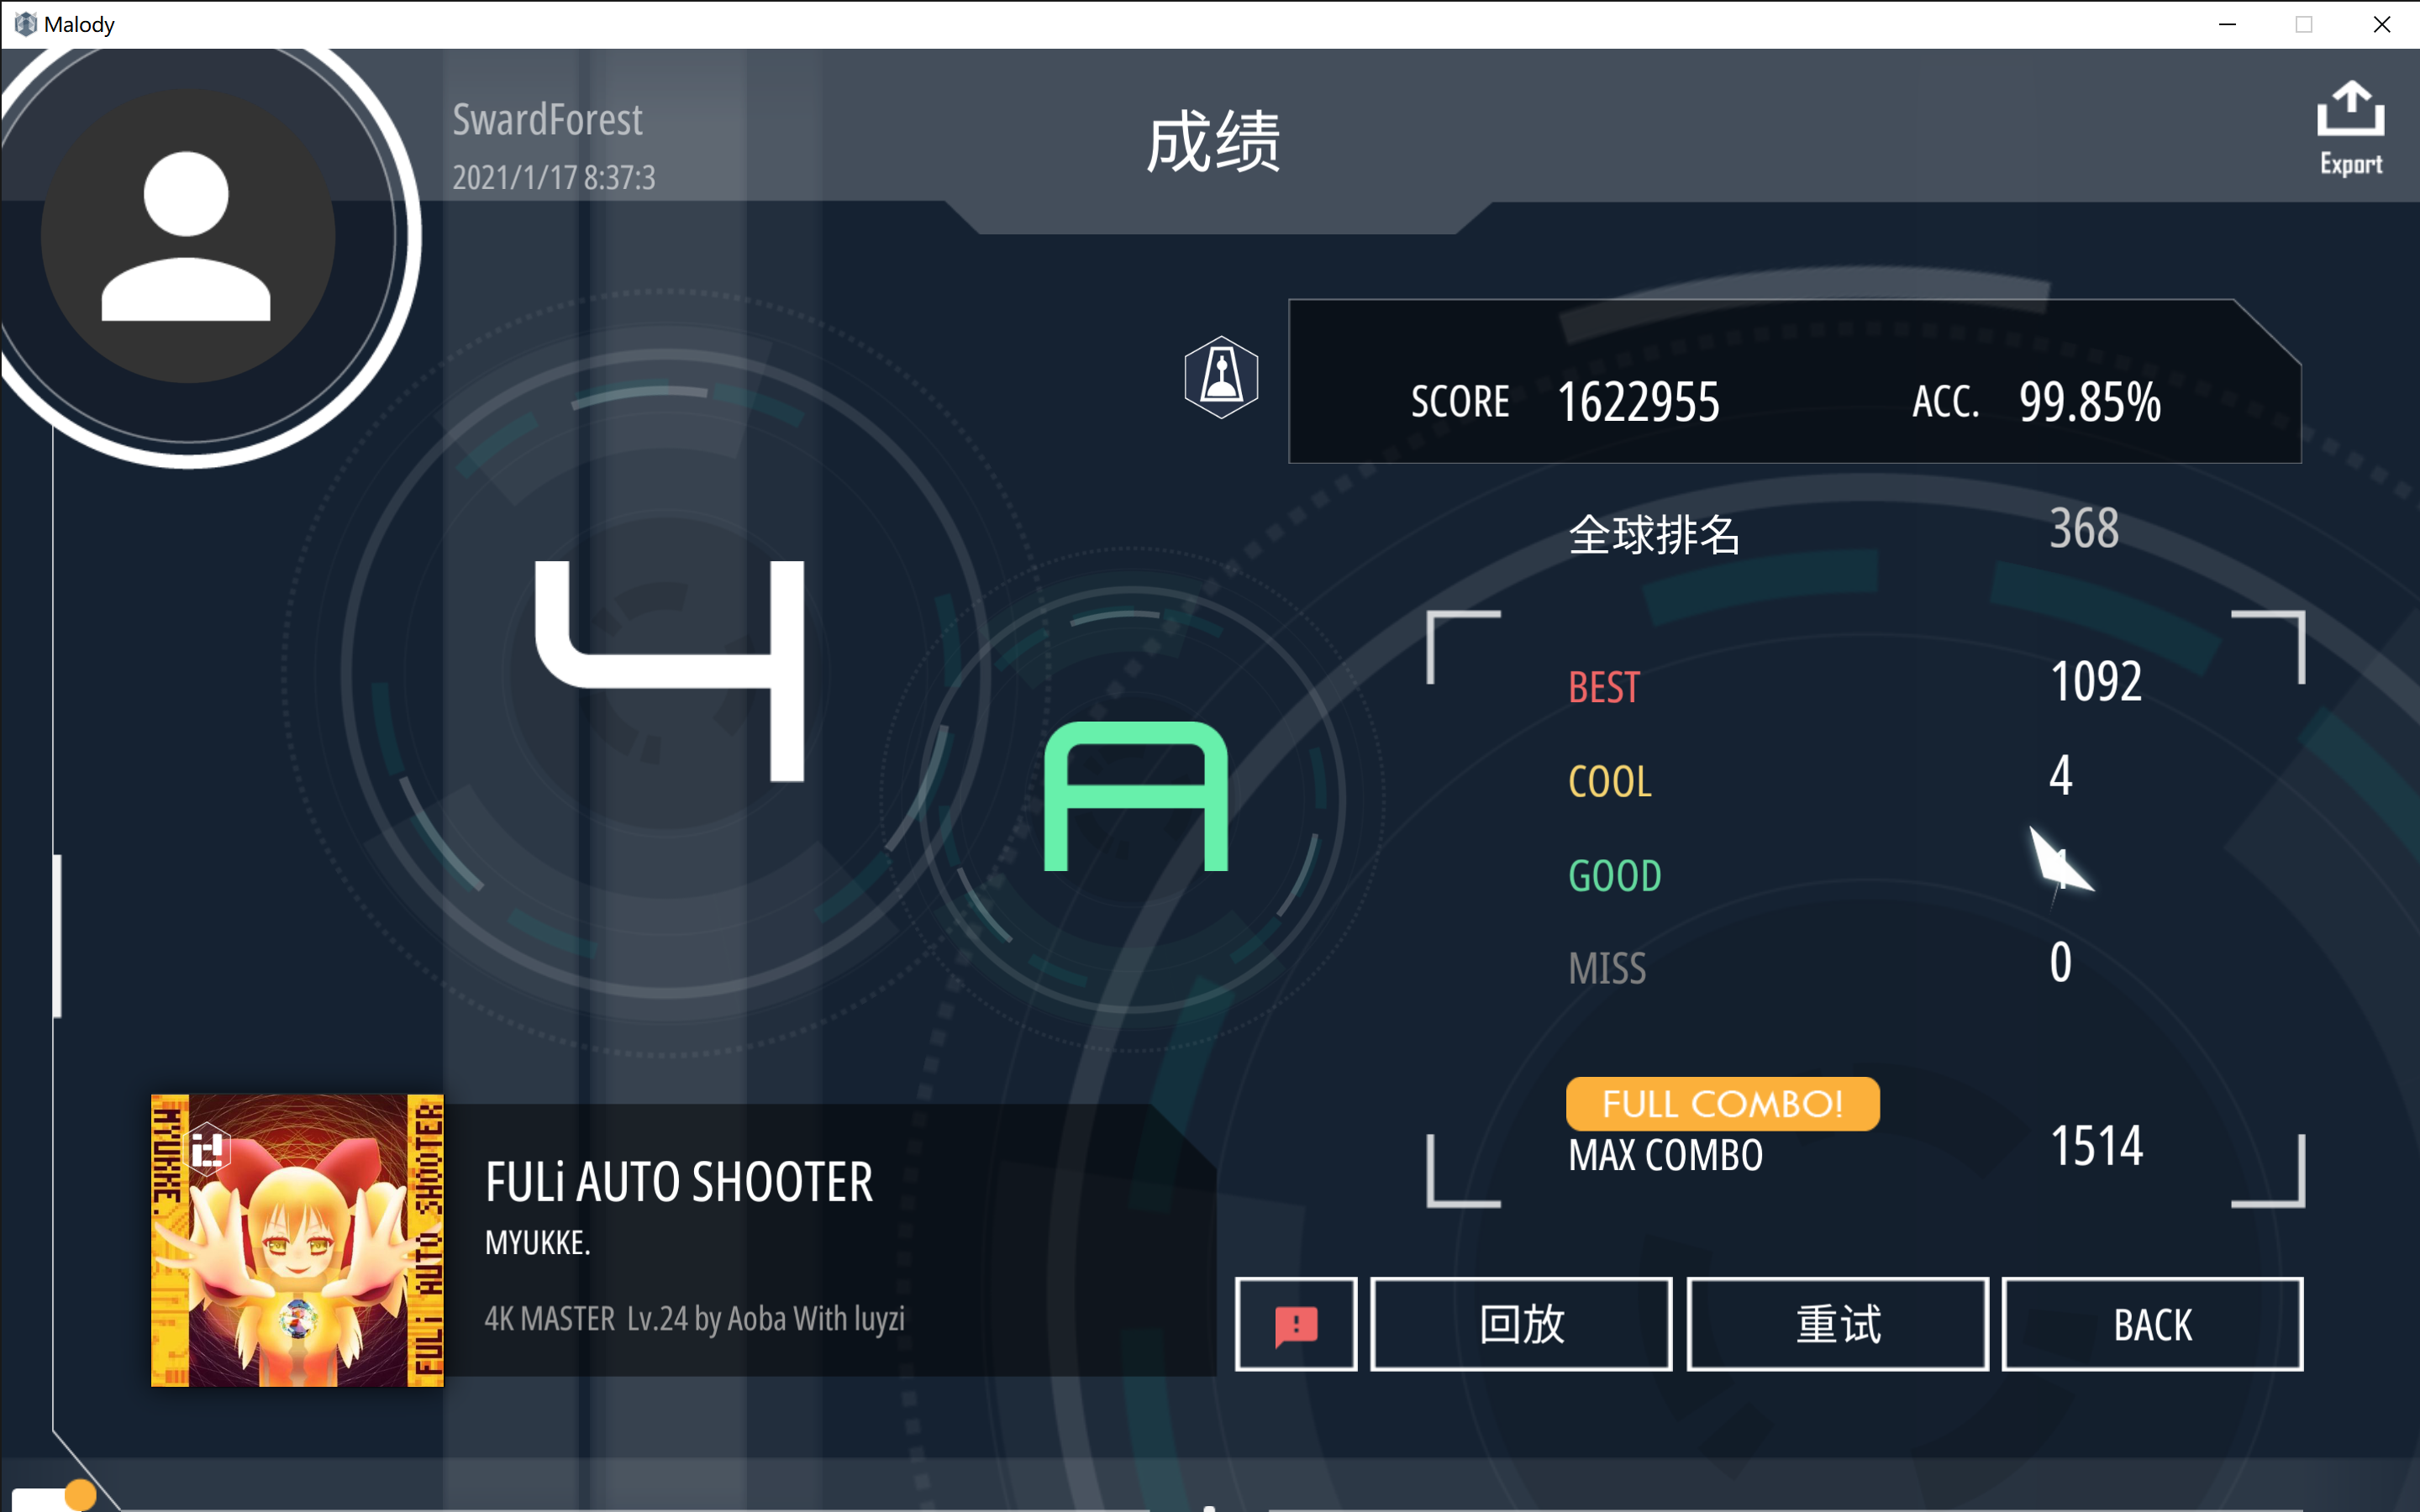 【随便玩玩】FULi AUTO SHOOTER 4K LV.24 A判 FC